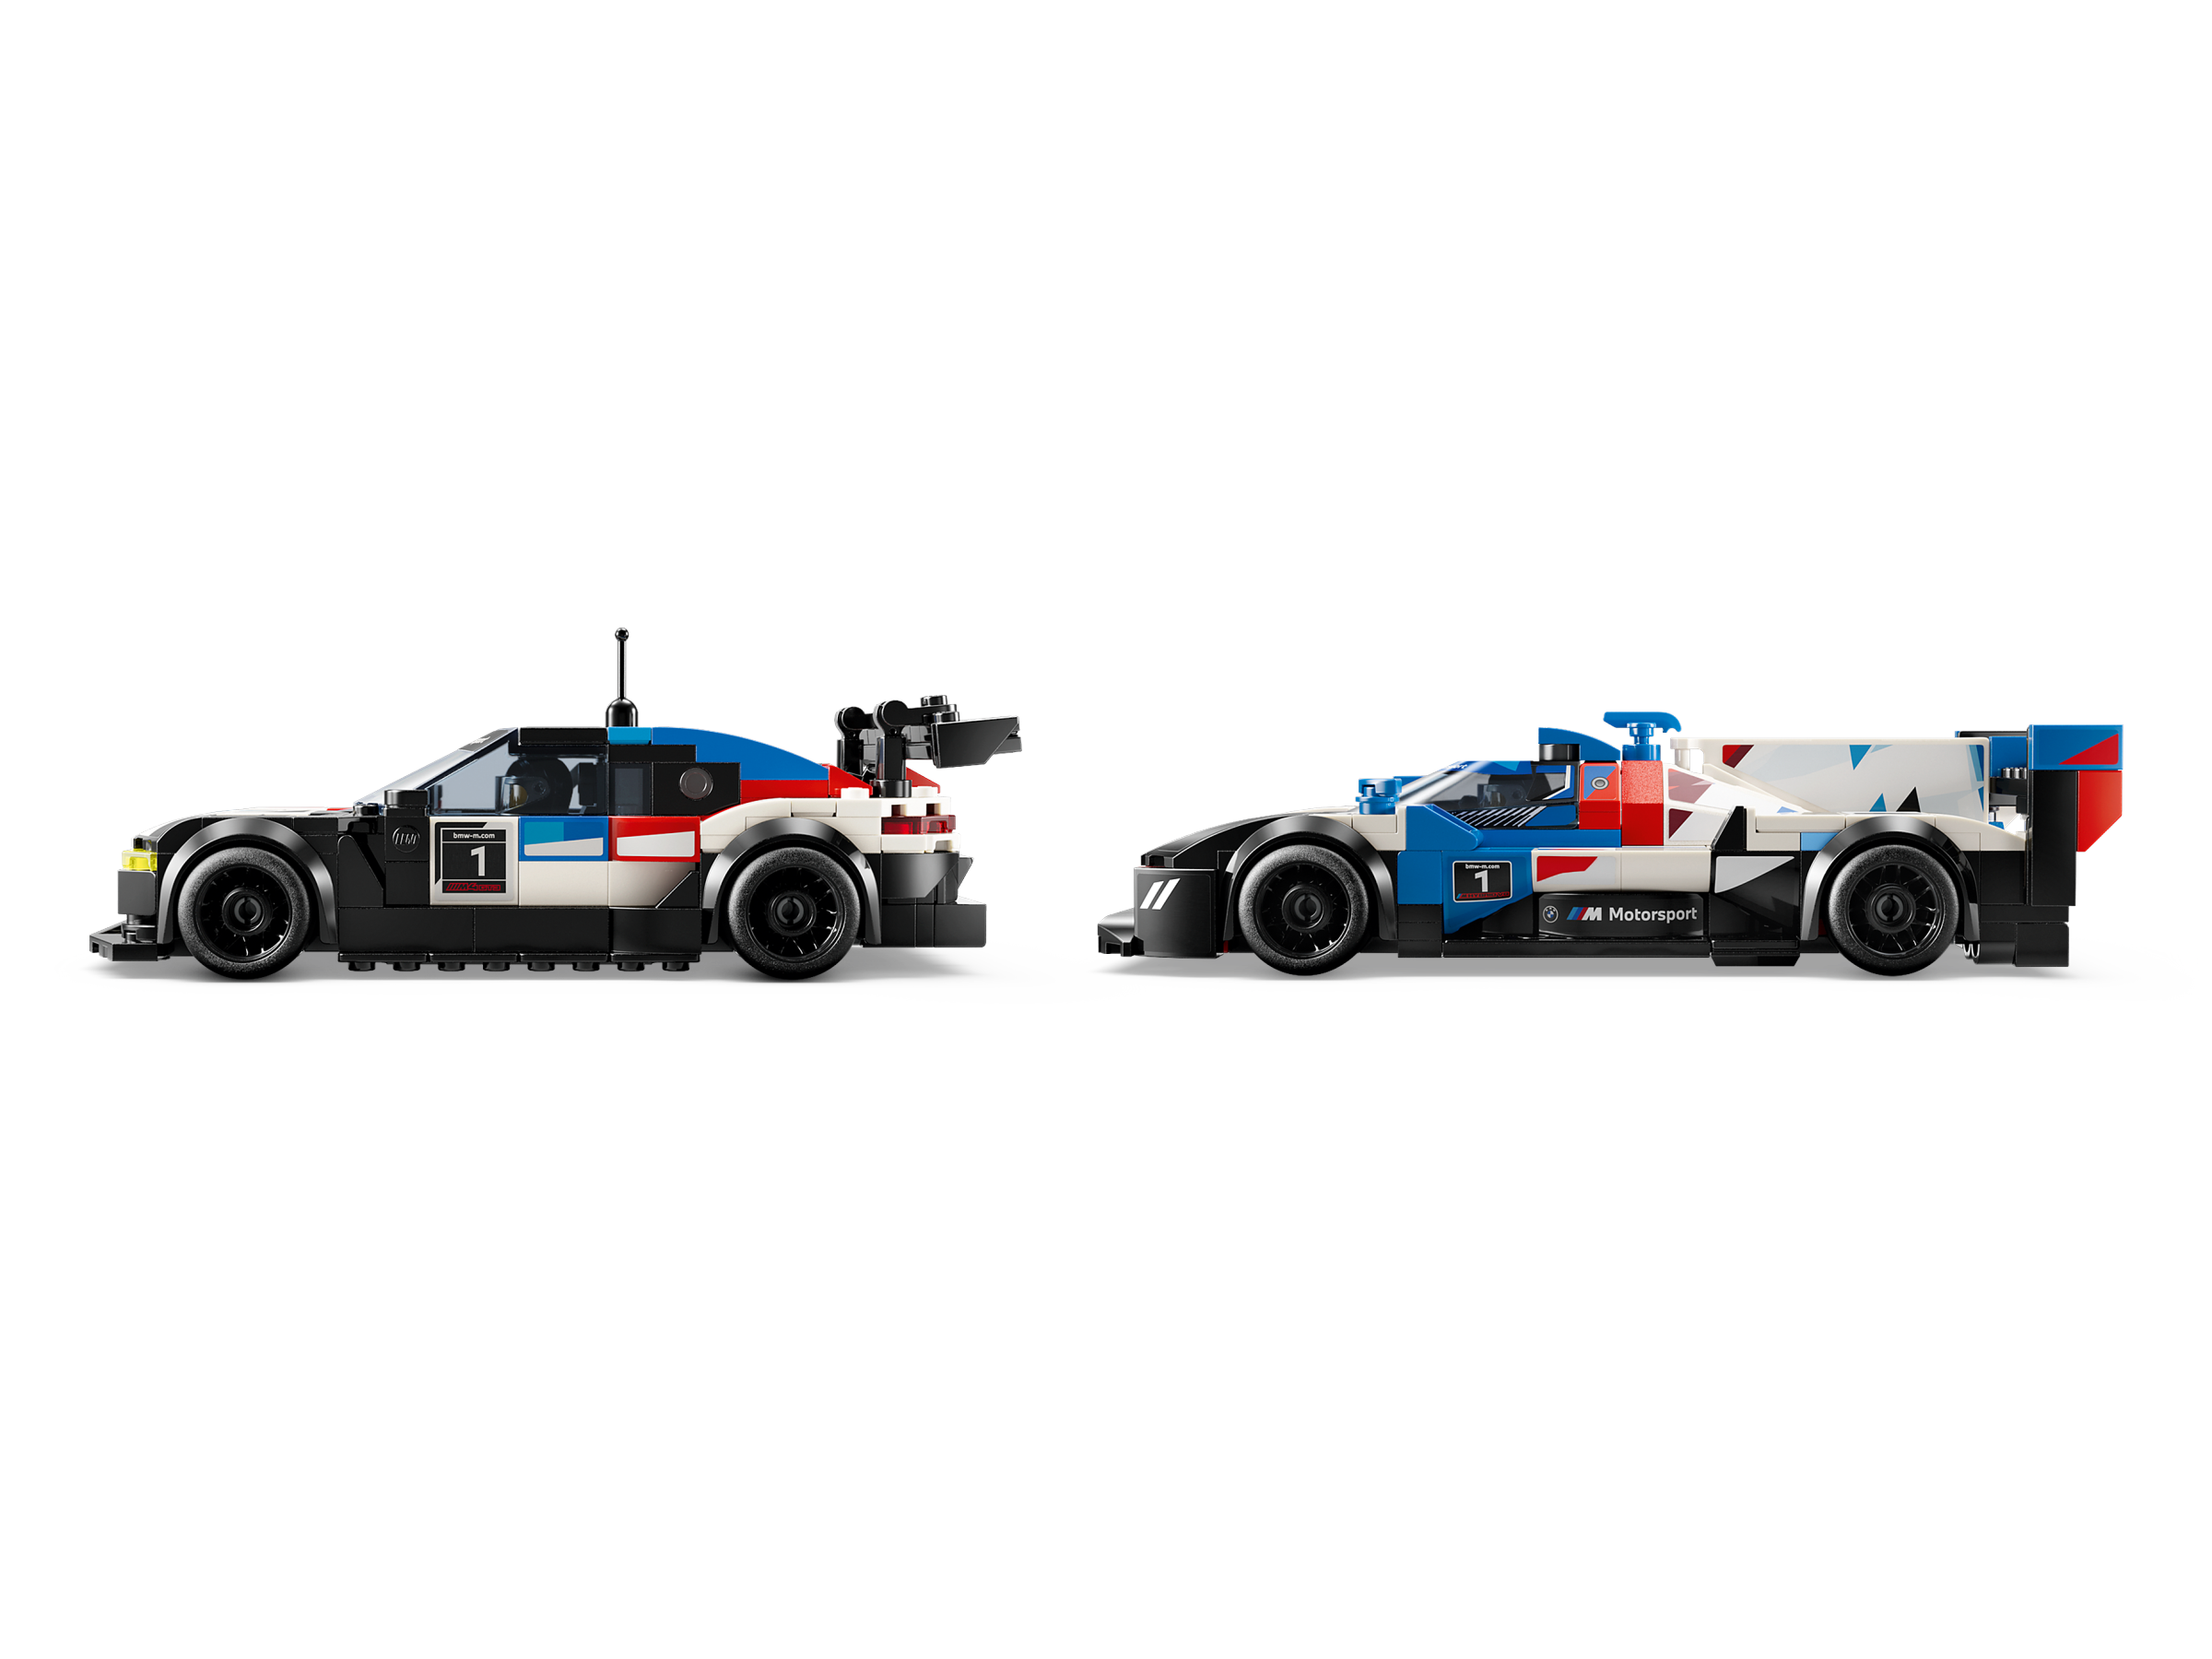 BMW M4 GT3 & BMW M Hybrid V8 Race Cars